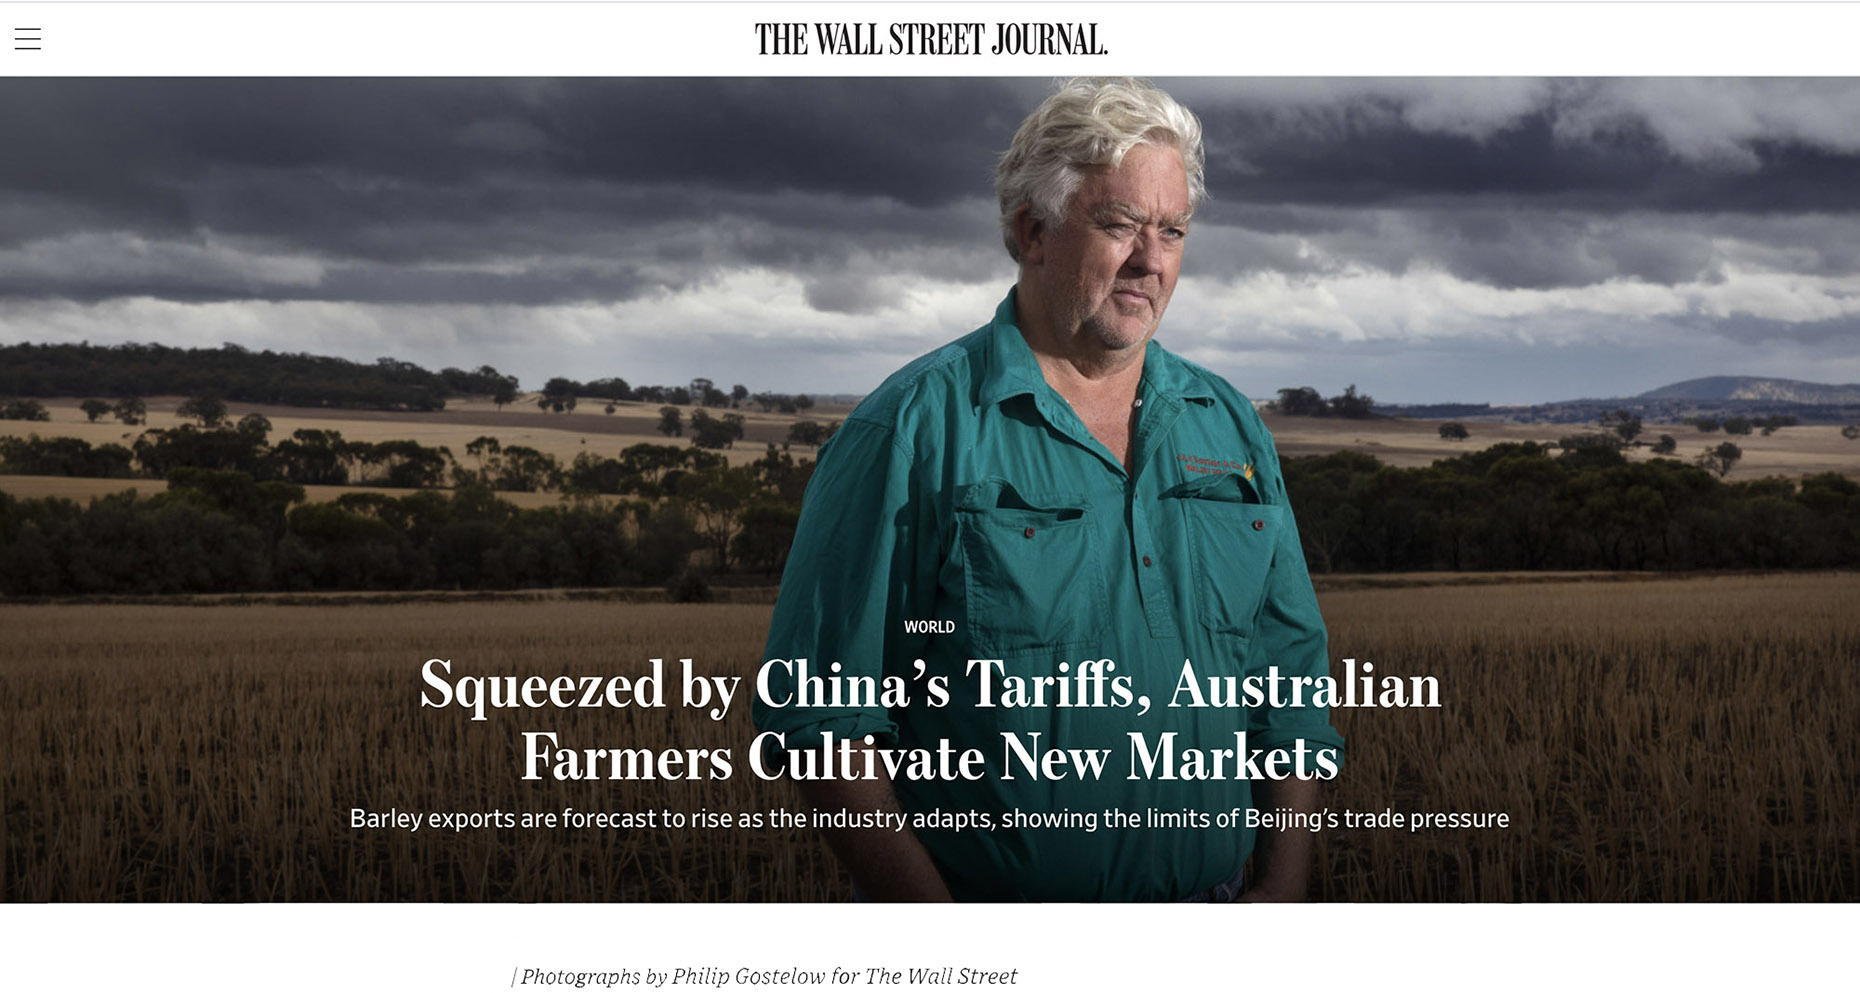 Wall Street Journal - Barley farmer - Chinese tariffs on Australian grain